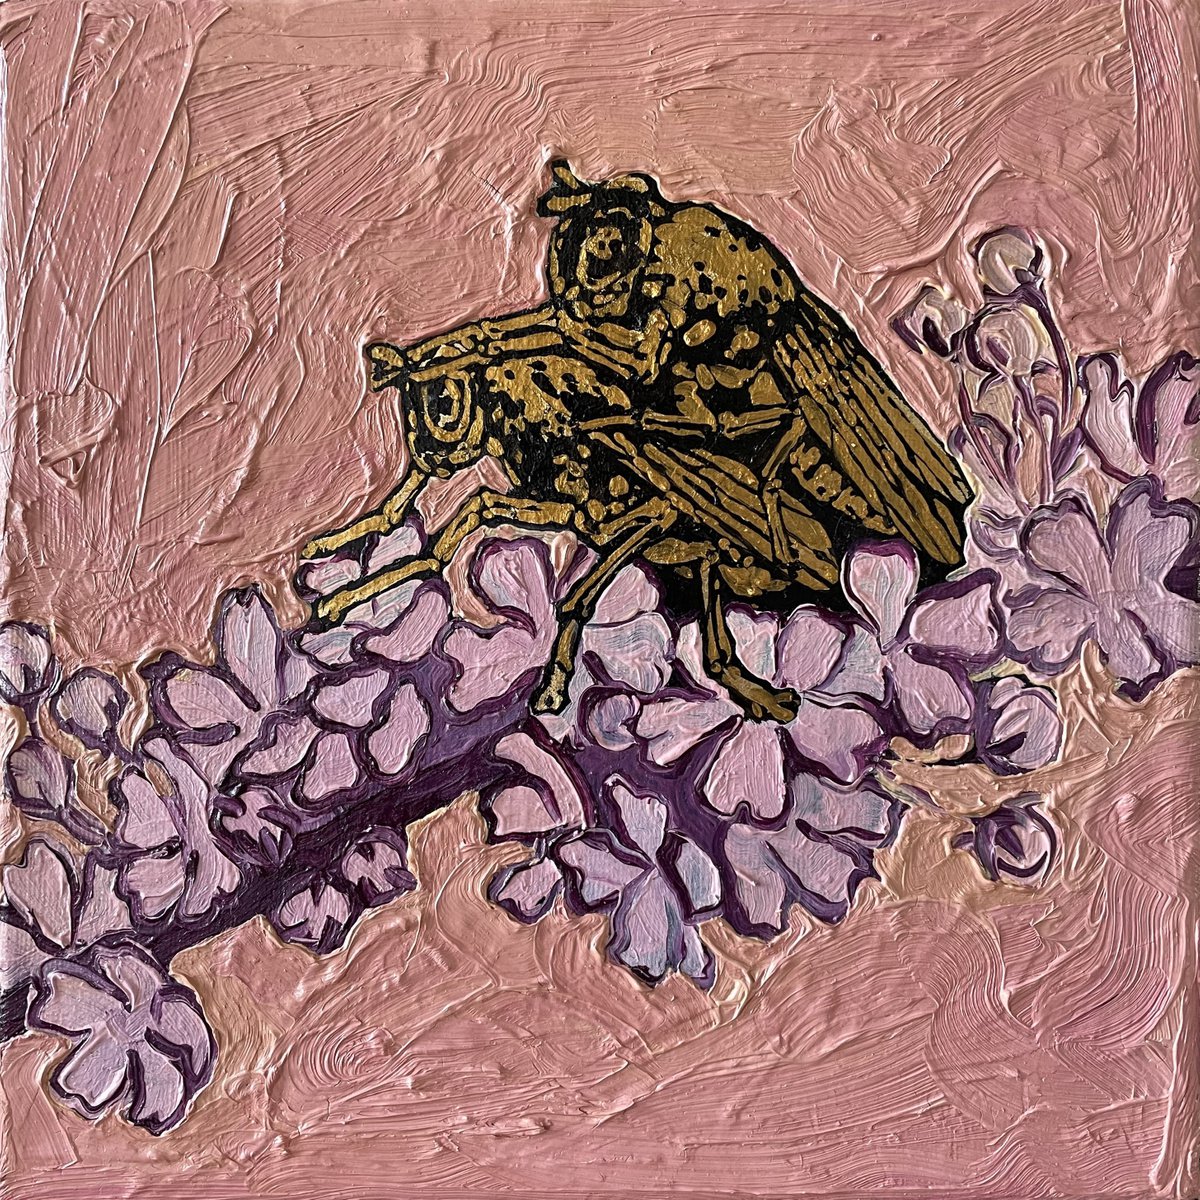 Drosophila Lovers by Inga Makarova